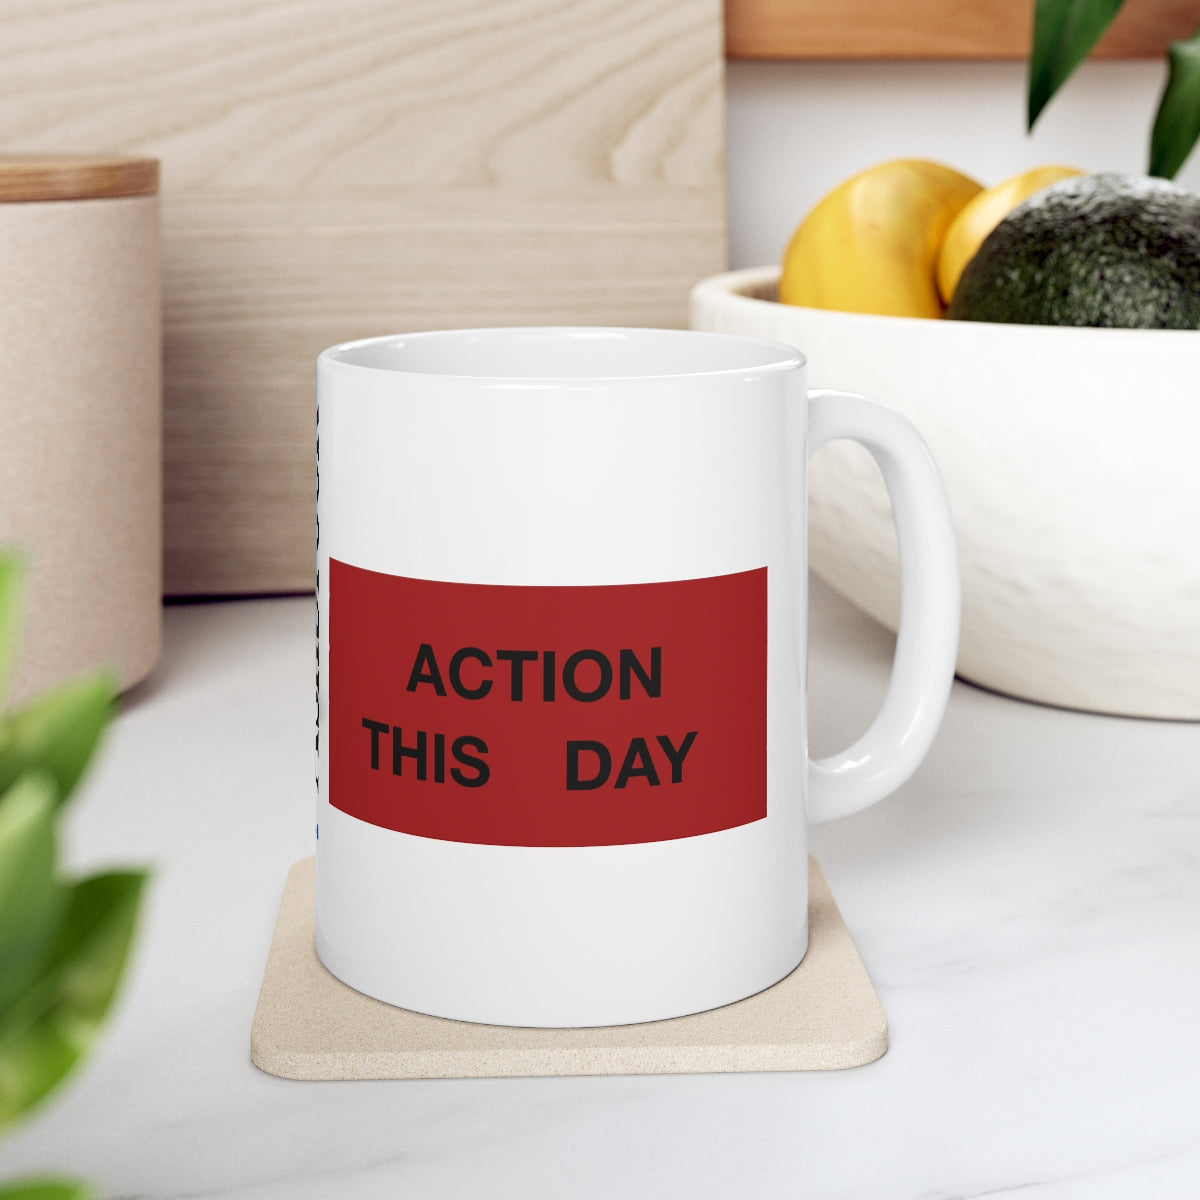 ACTION THIS DAY Ceramic Mug